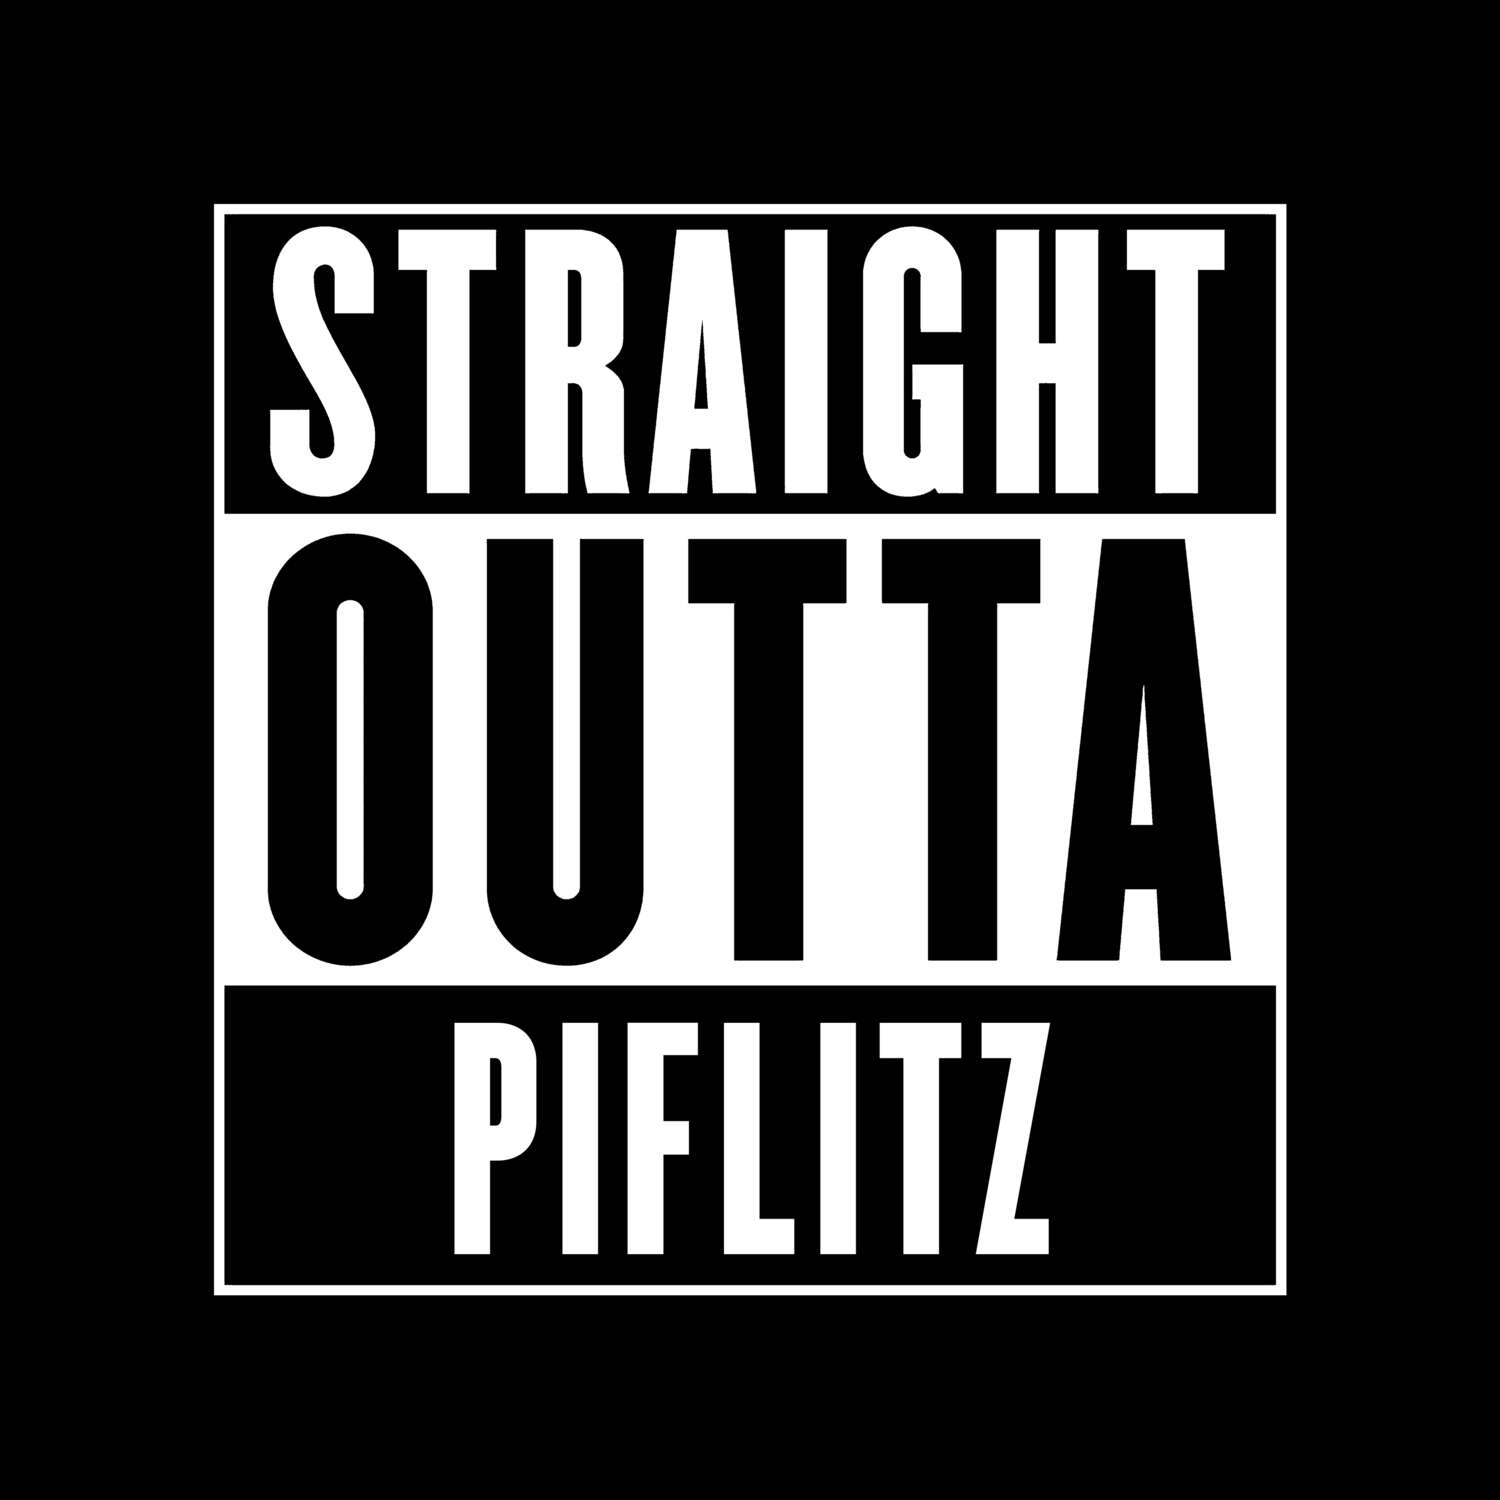 Piflitz T-Shirt »Straight Outta«